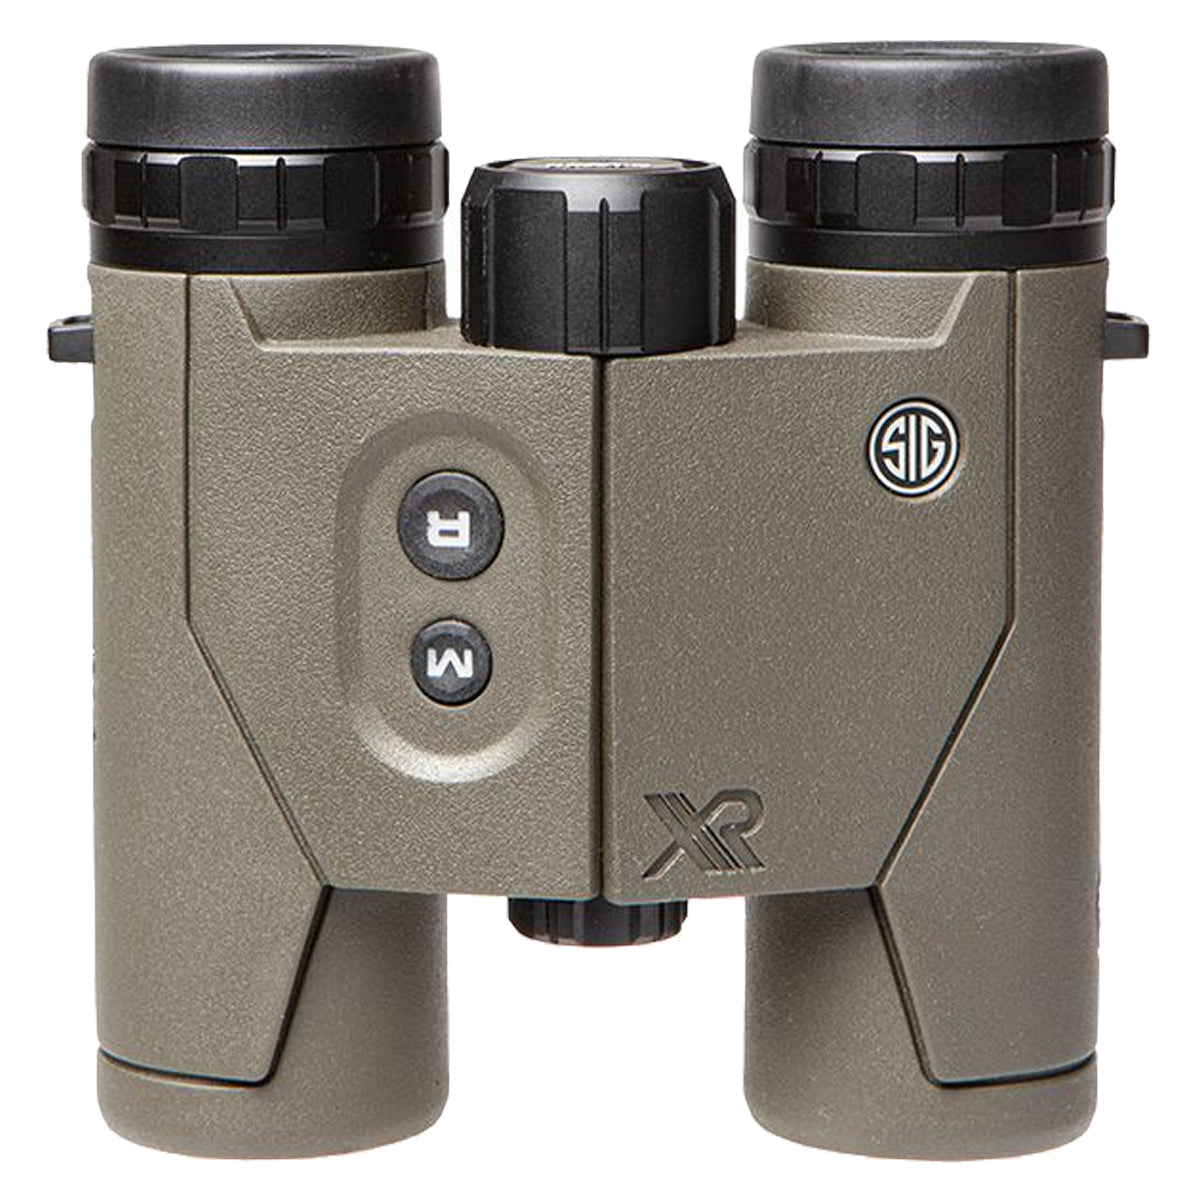 SIG Sauer KILO6K-HD Comact 8X32mm BDX LRF Rangefinding Binocular